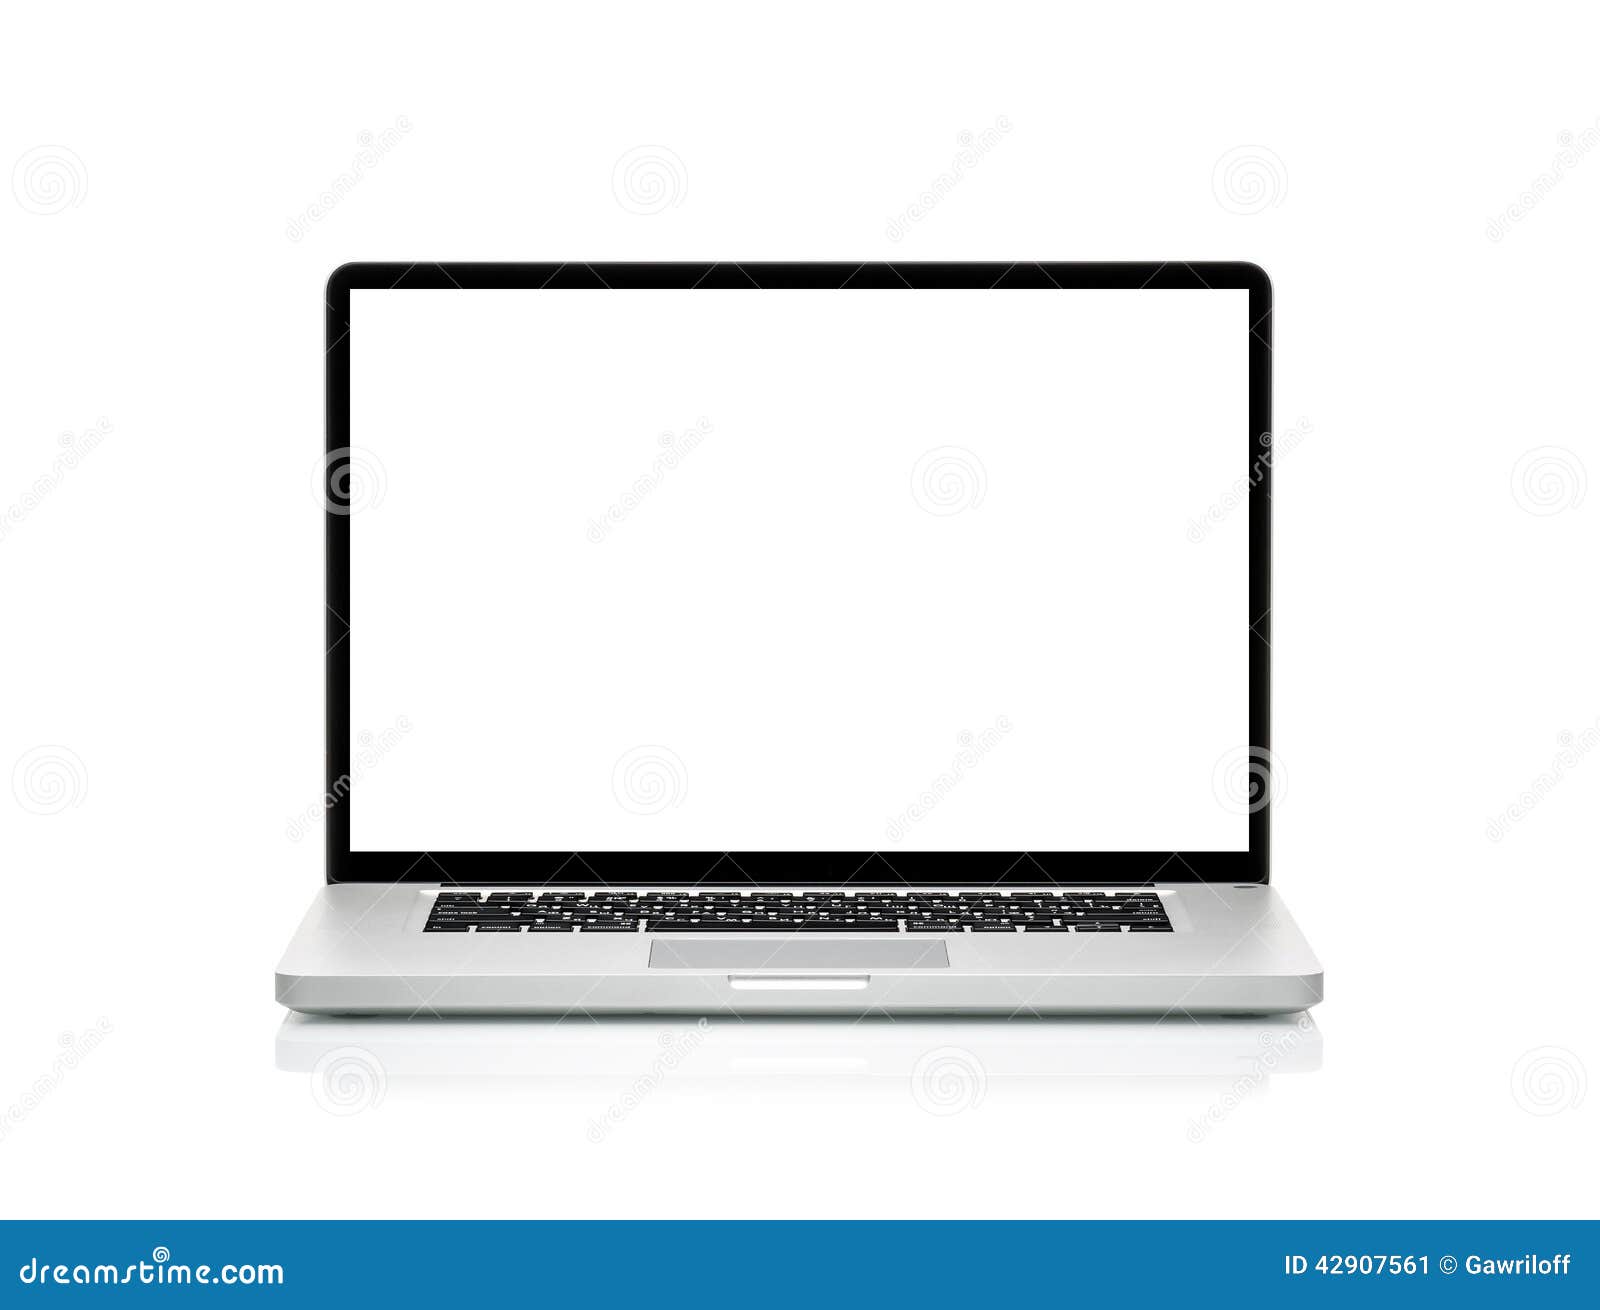 laptop, like macbook with blank screen.